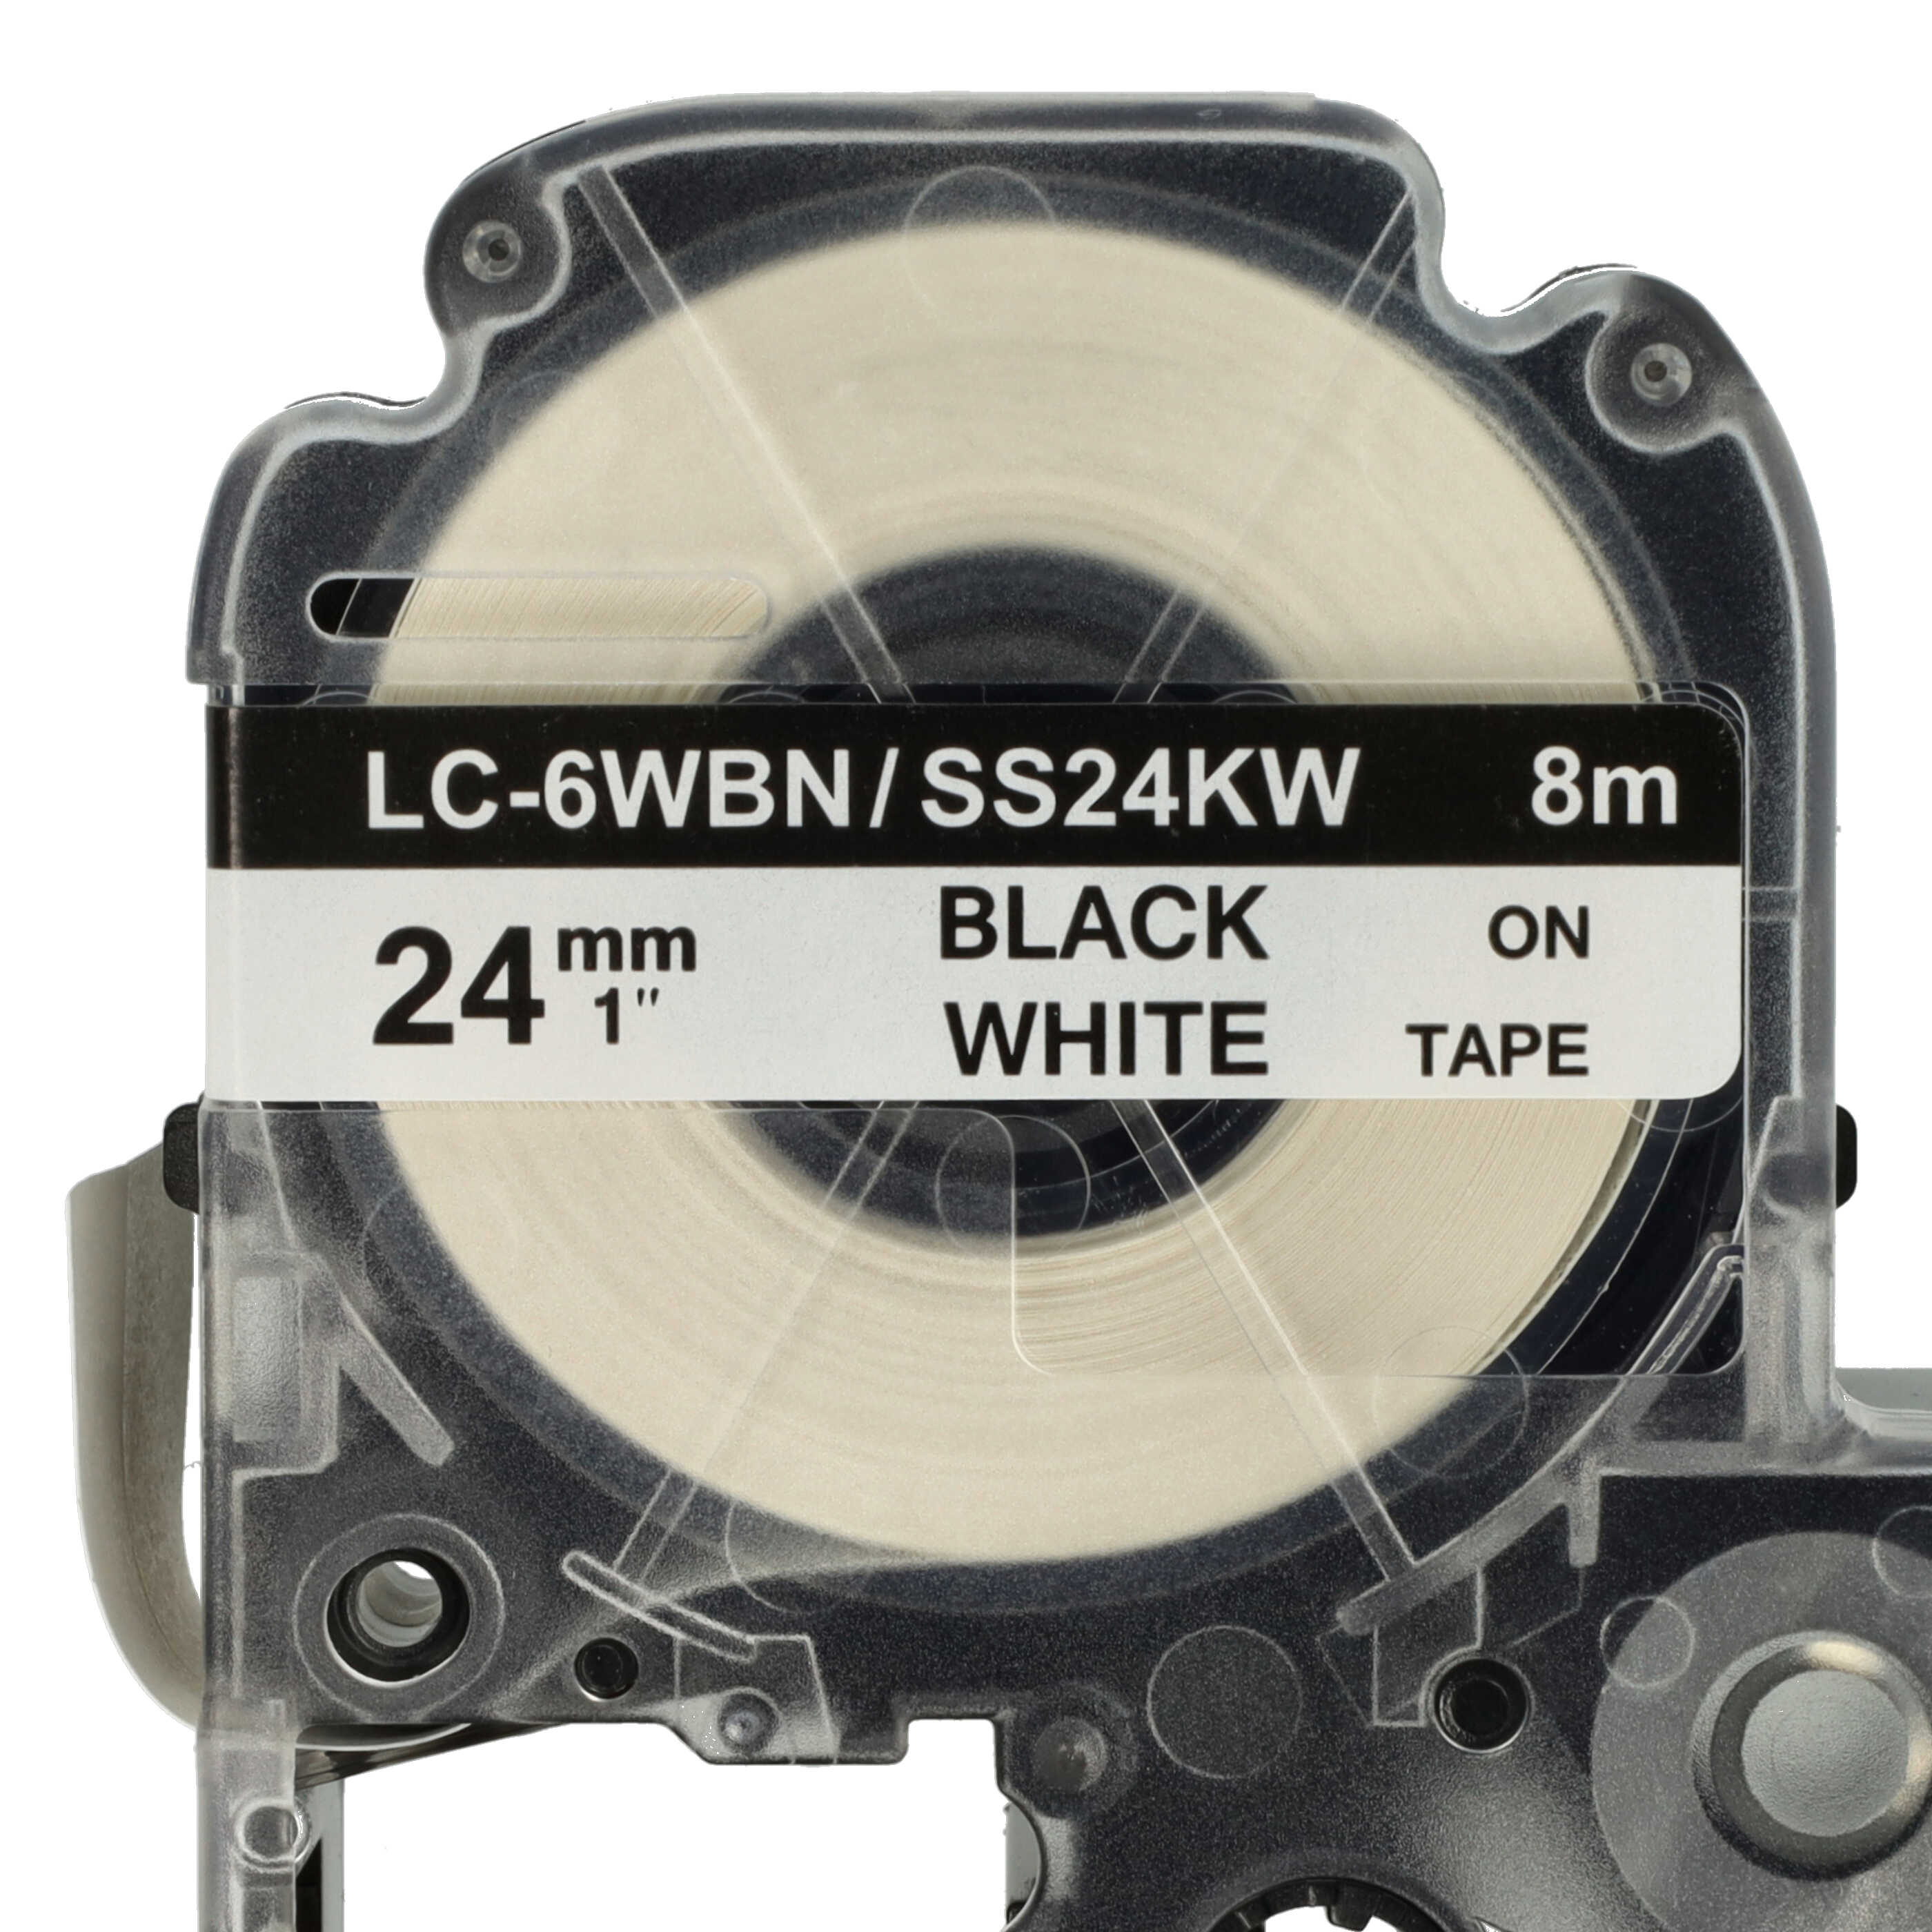 50x Casete cinta escritura reemplaza Epson LC-6WBN Negro su Blanco